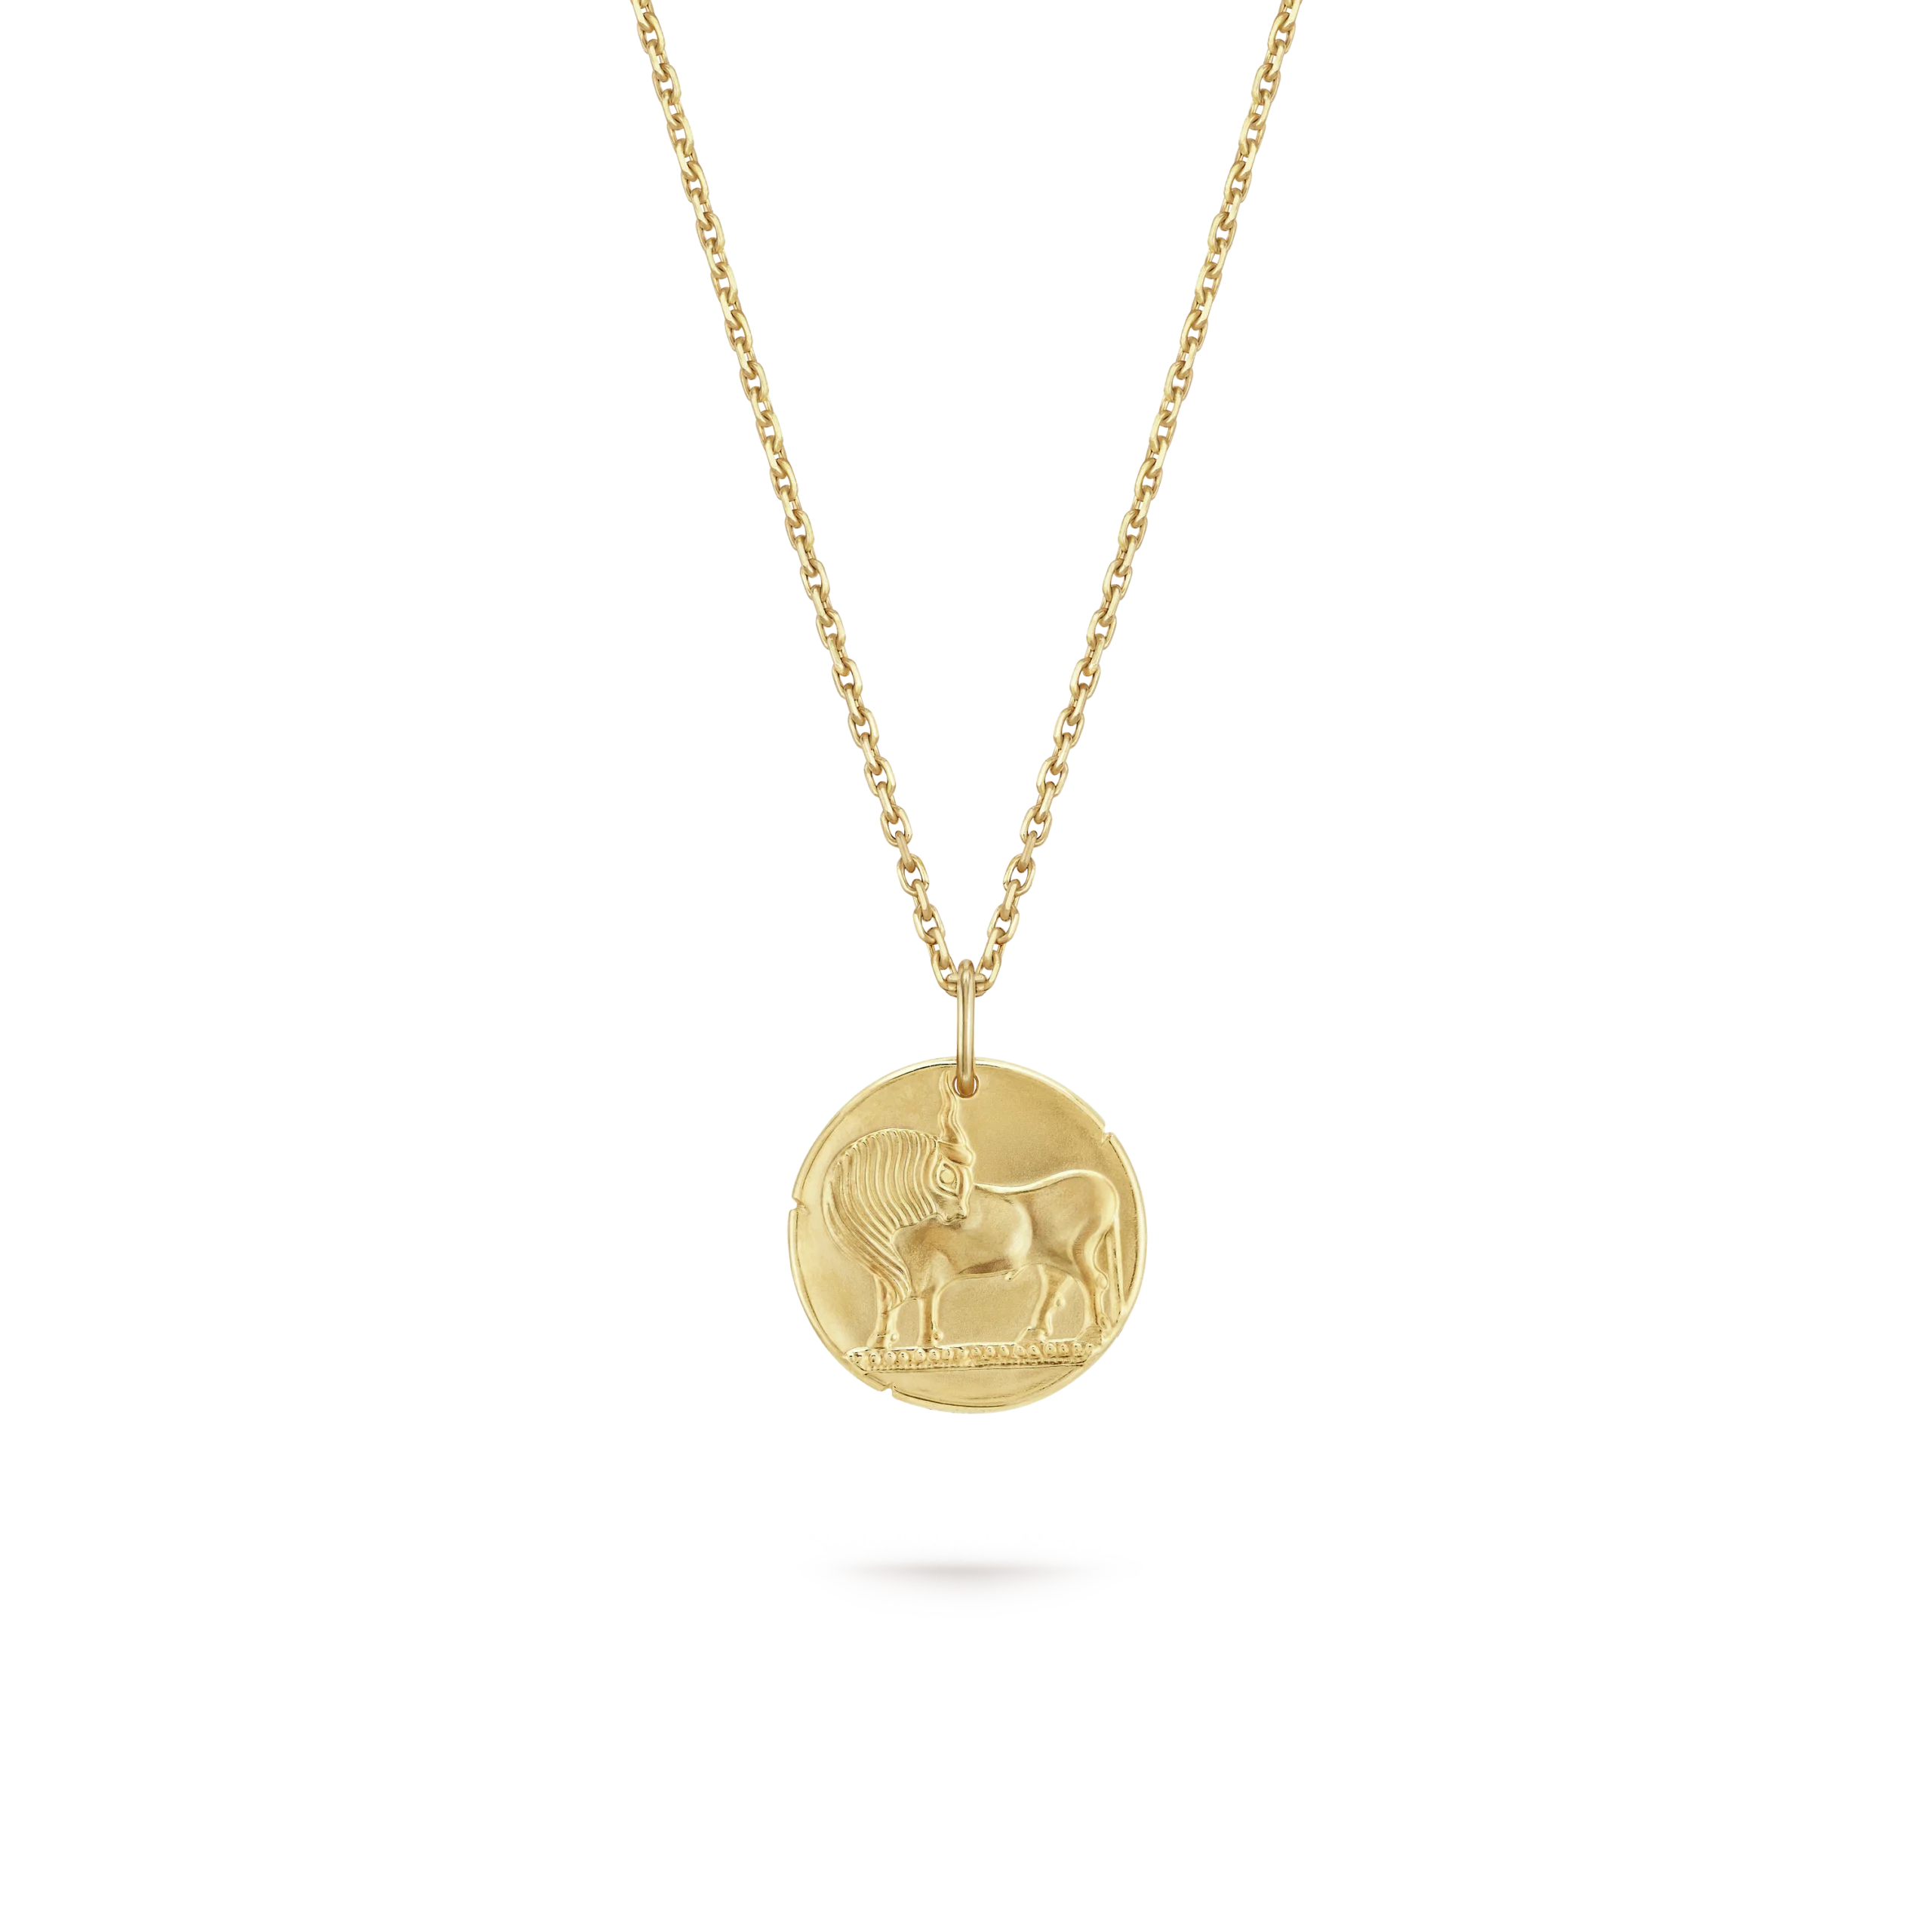 Zodiaque-medal-Tauri-Taurus-2-scaled-1.webp